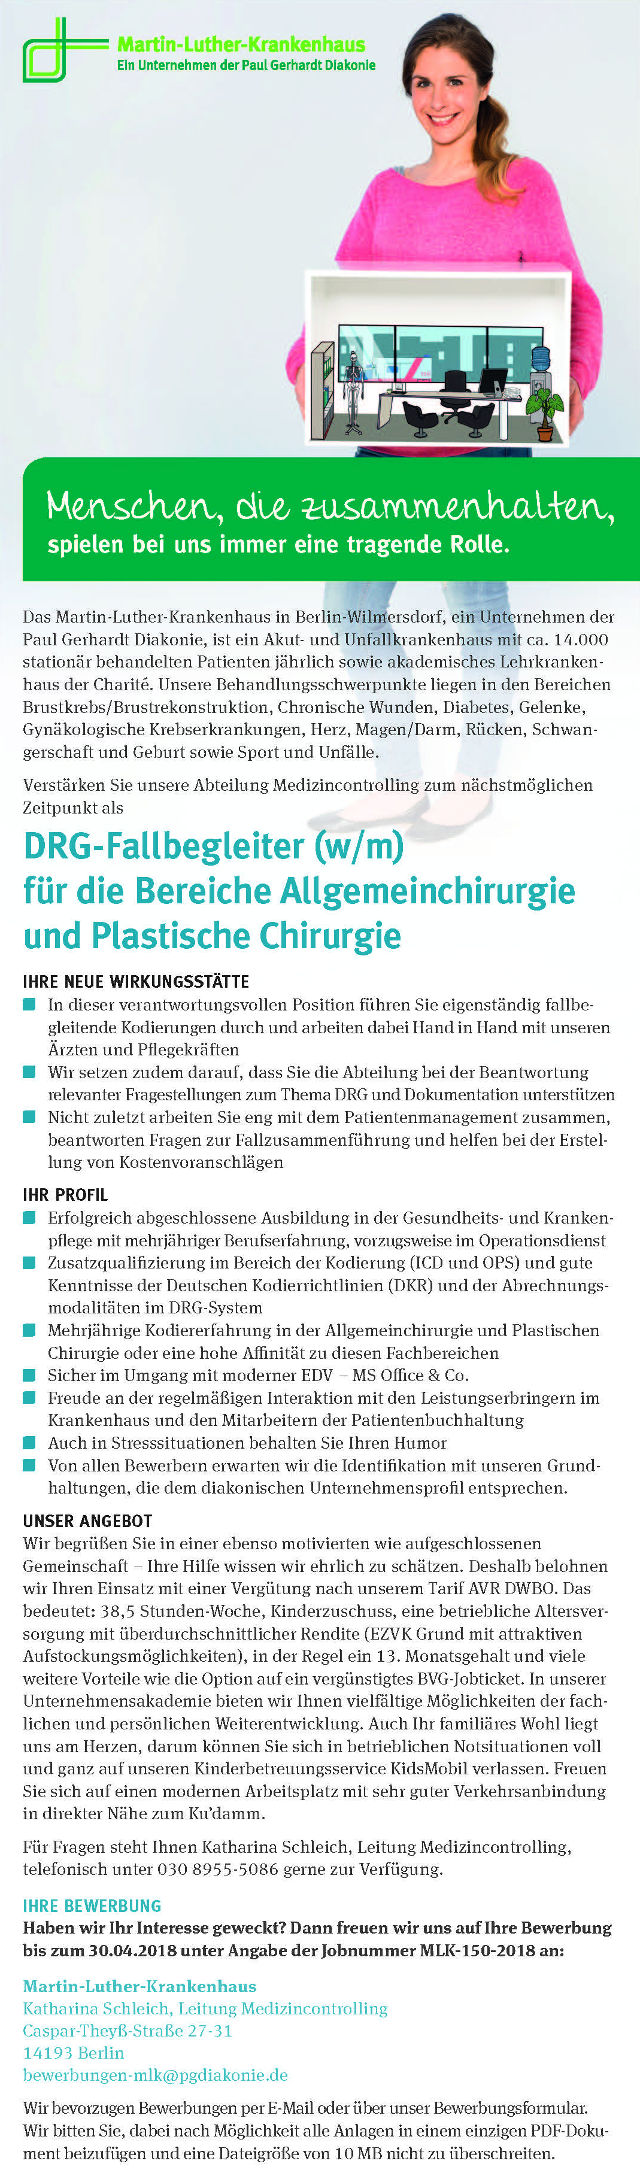 Martin-Luther-Krankenhaus, Berlin-Wilmersdorf: DRG-Fallbegleiter (w/m)